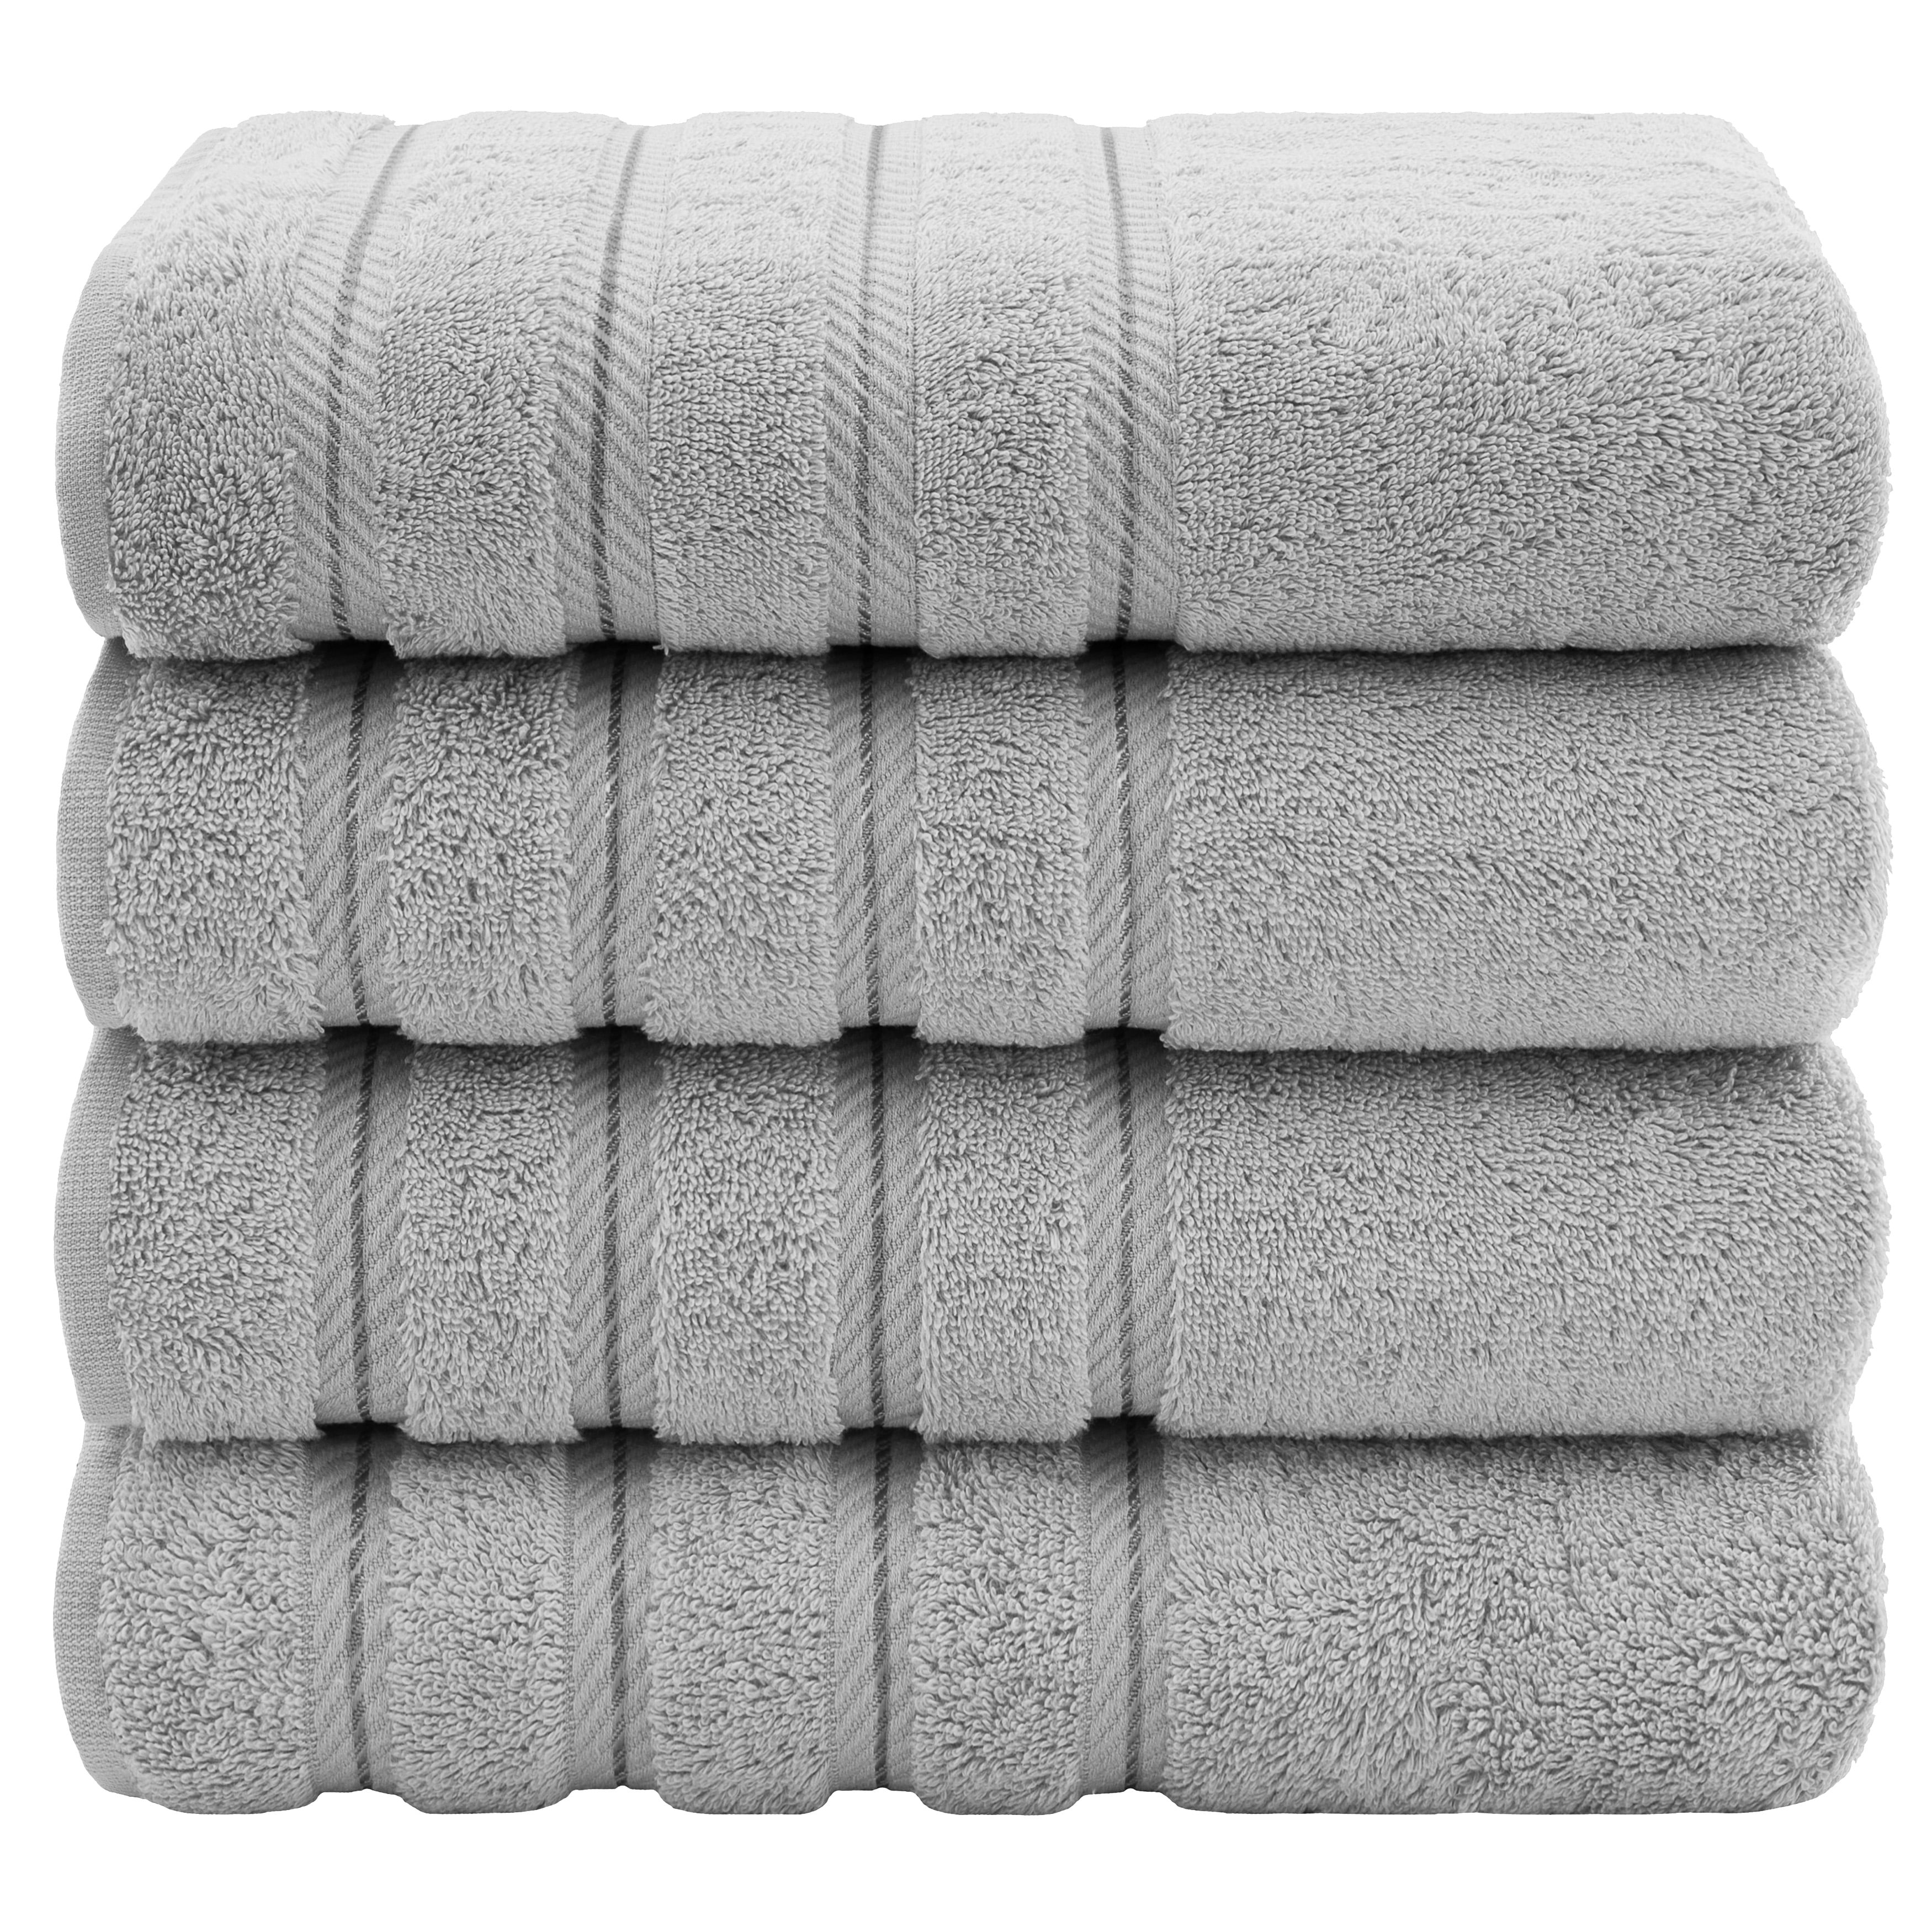 Cotton Paradise Bath Towels, 100% Turkish Cotton 27x54 inch 4 Piece Bath  Towel Sets for Bathroom, Soft Absorbent Towels Clearance Bathroom Set, Gray